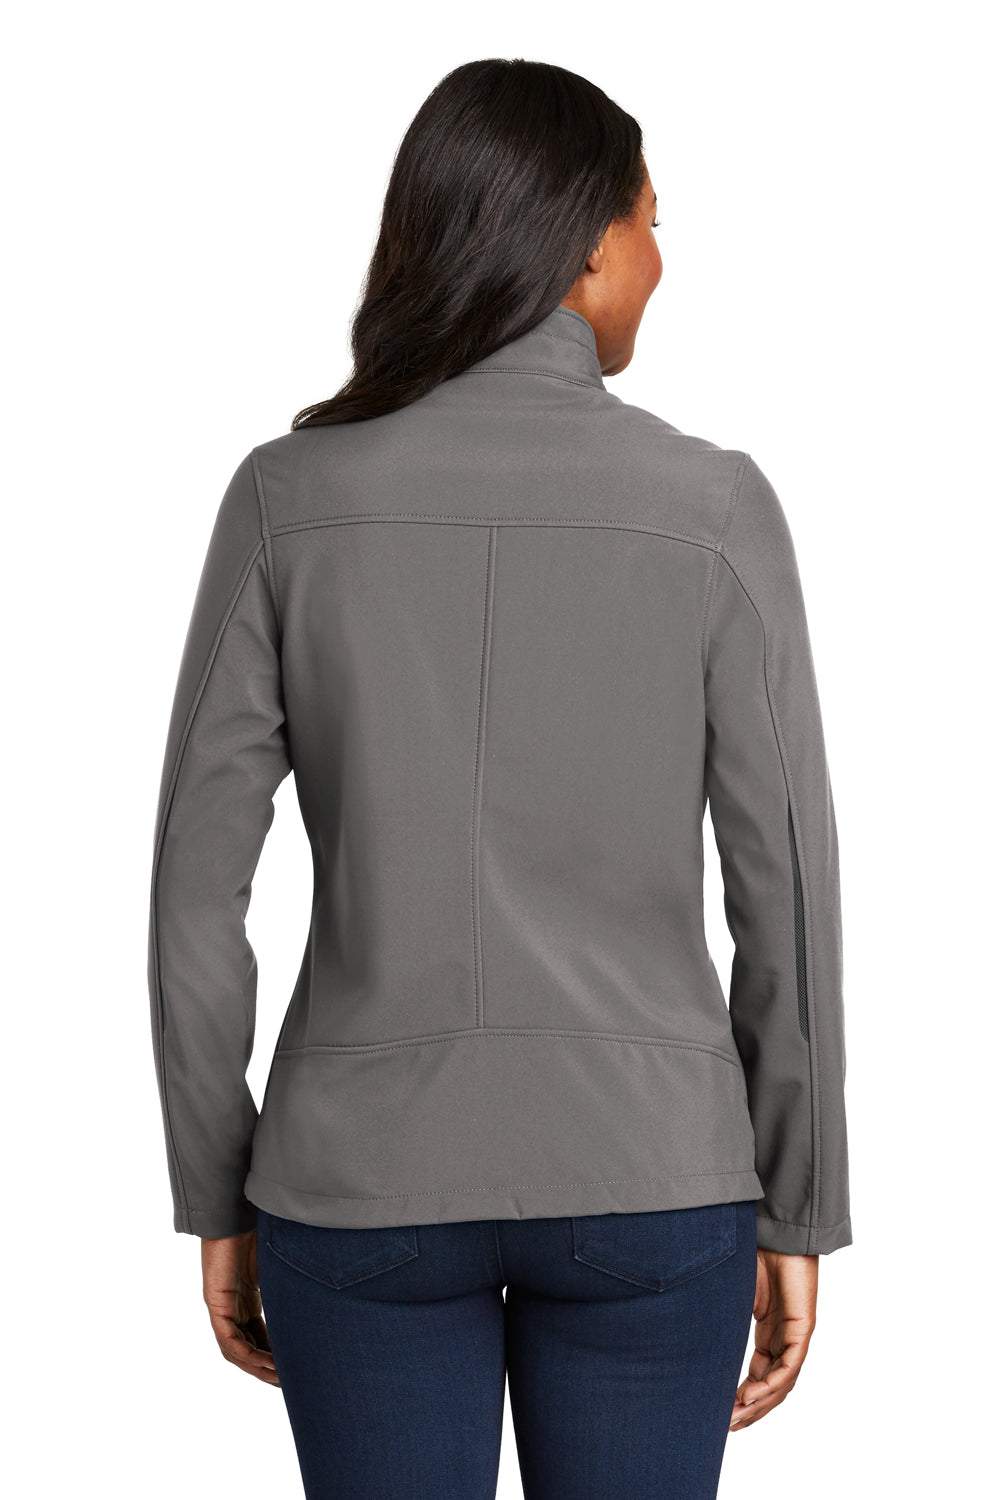 Port Authority L324 Womens Welded Wind & Water Resistant Full Zip Jacket Smoke Grey Back